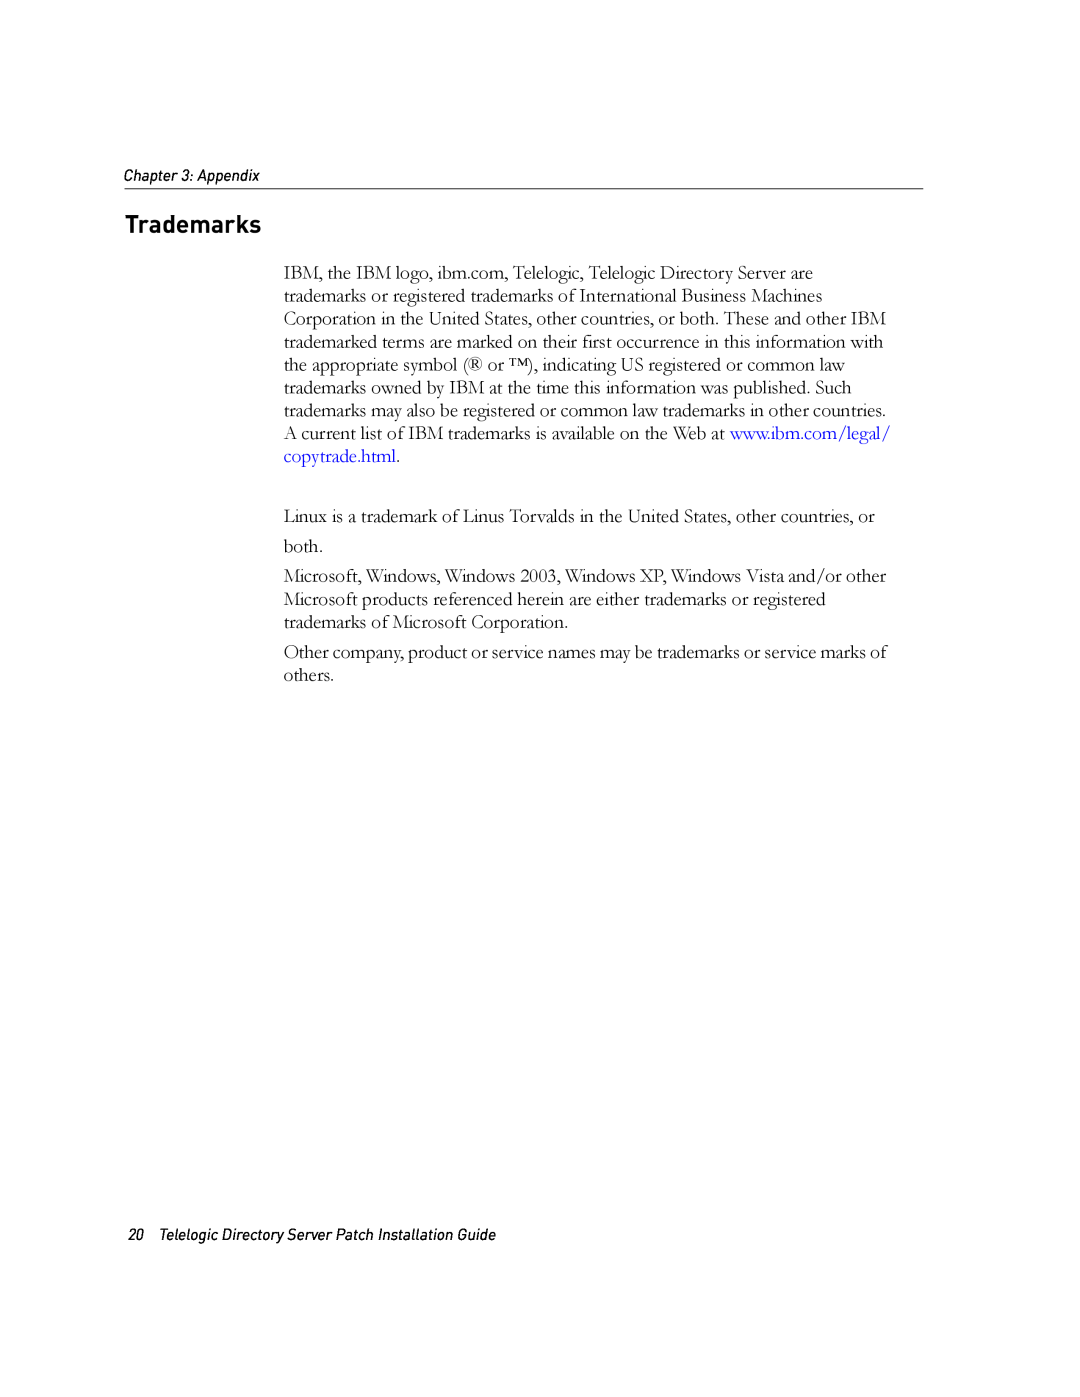 IBM Telelogic Directory Server manual Trademarks, Appendix 